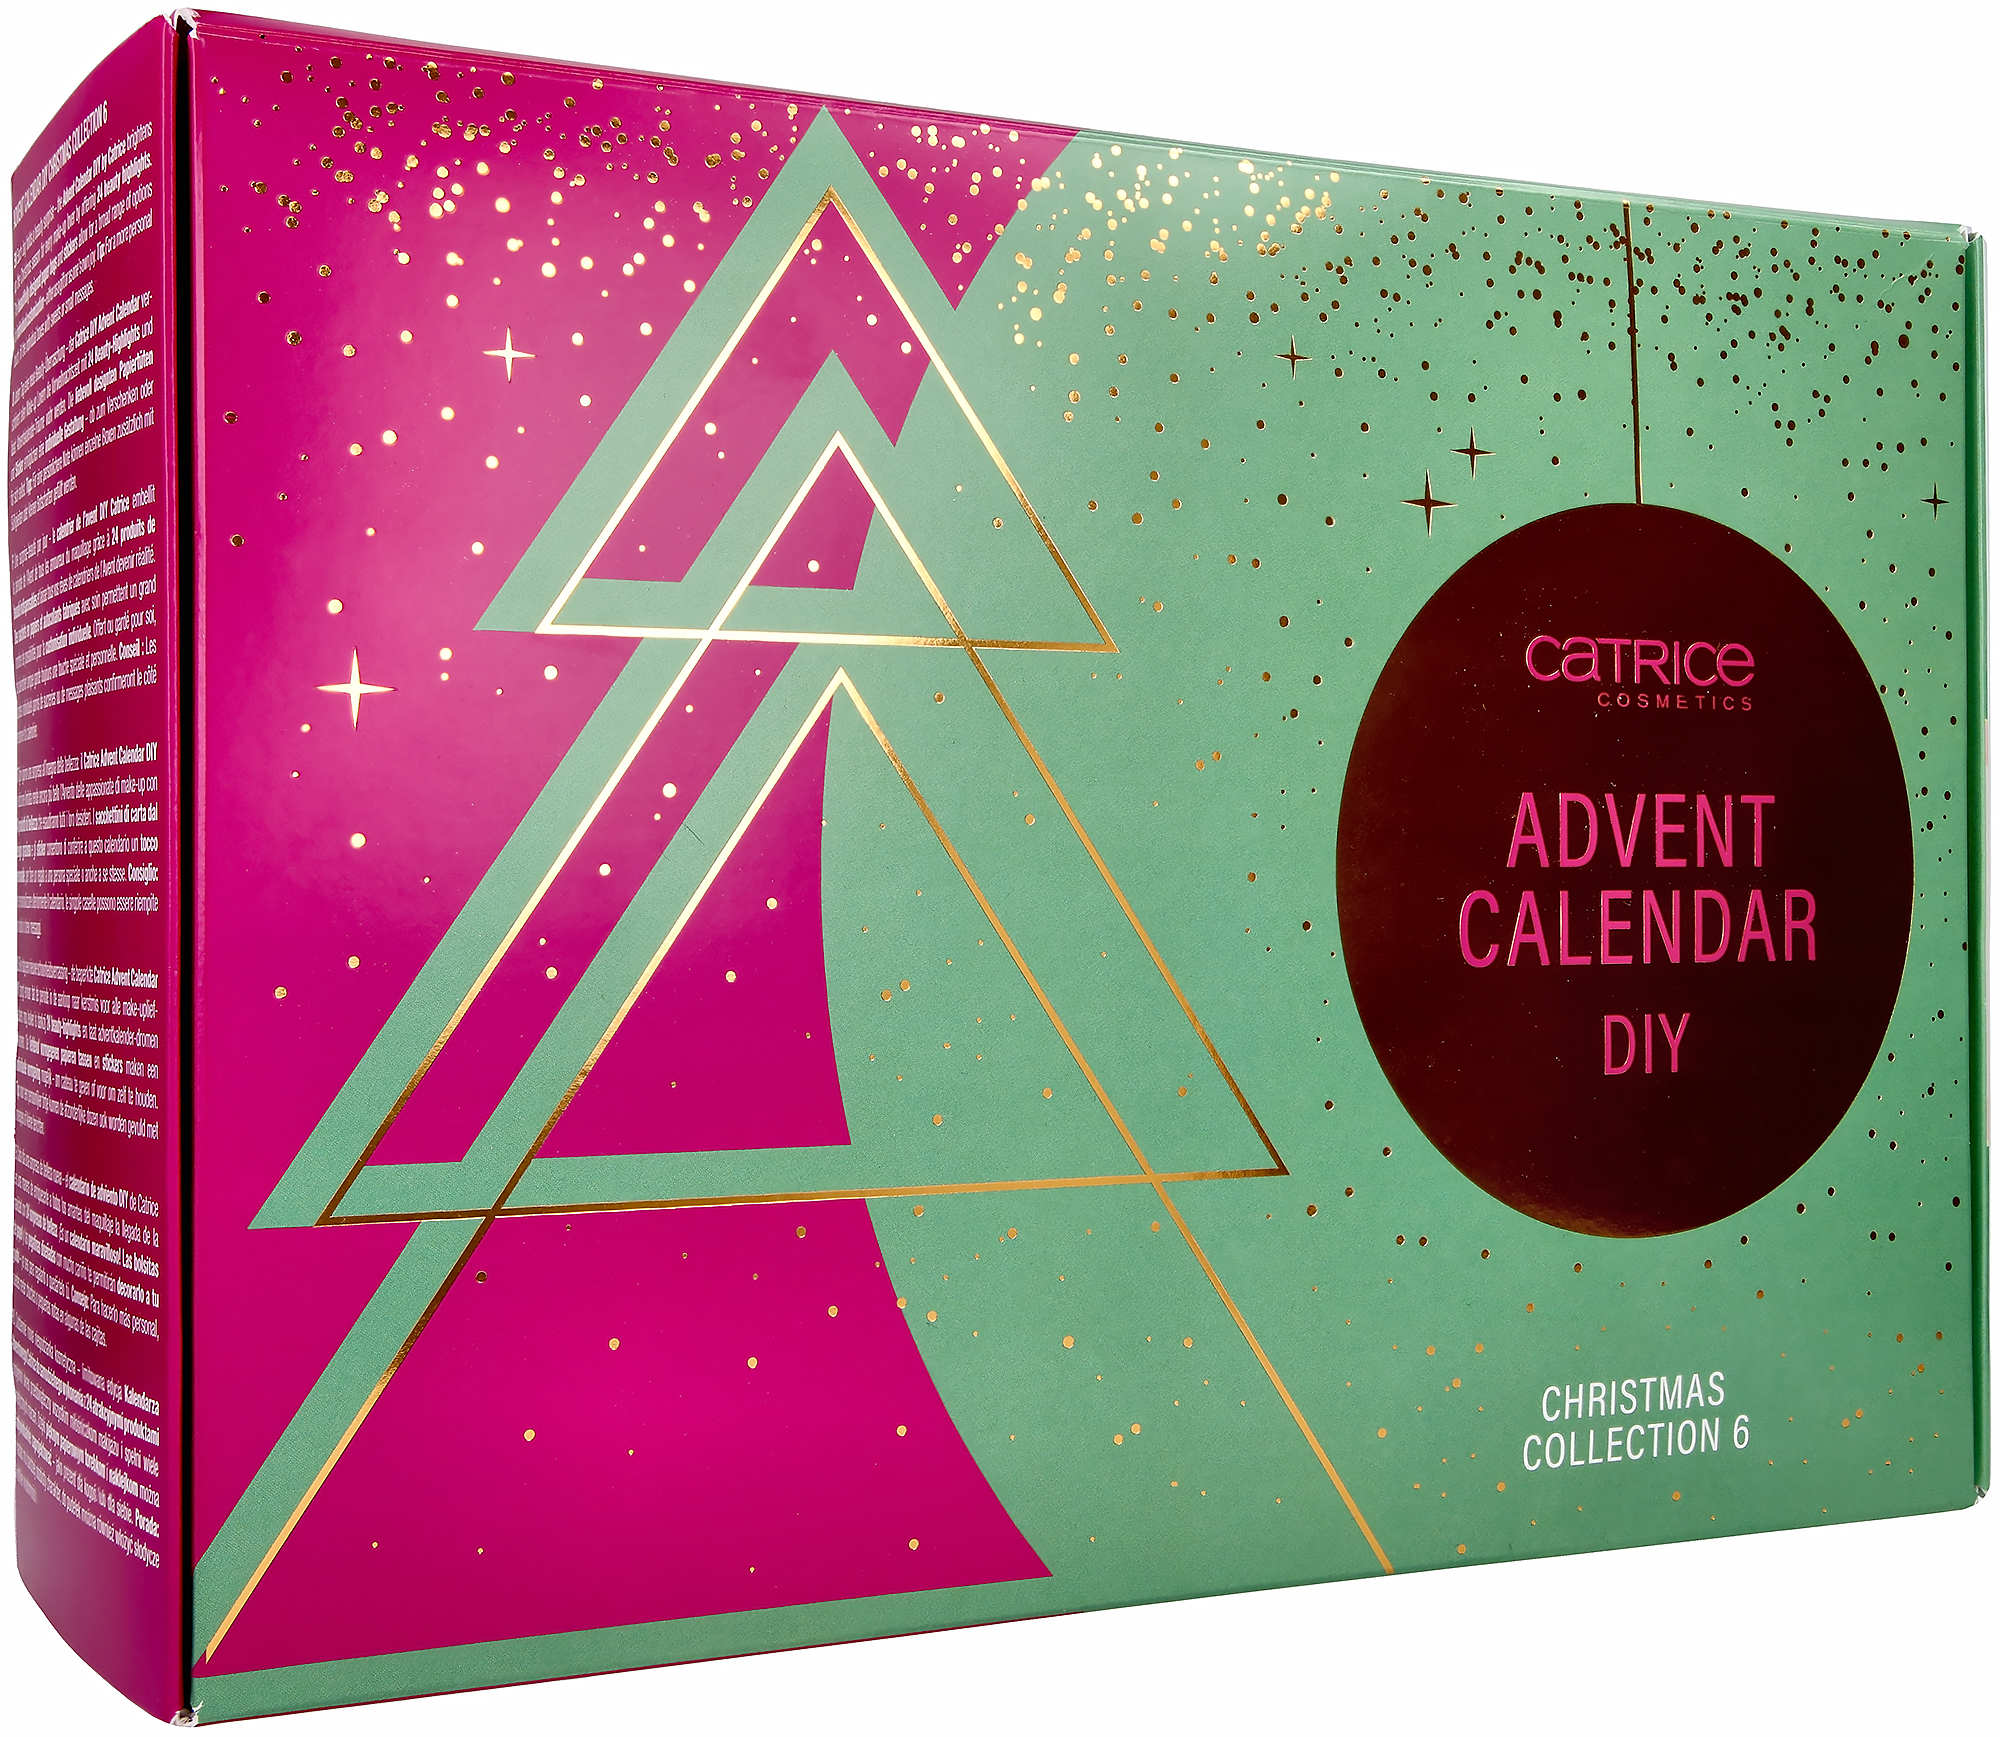 Catrice Advent Calendar DIY Christmas Collection | lyko.com